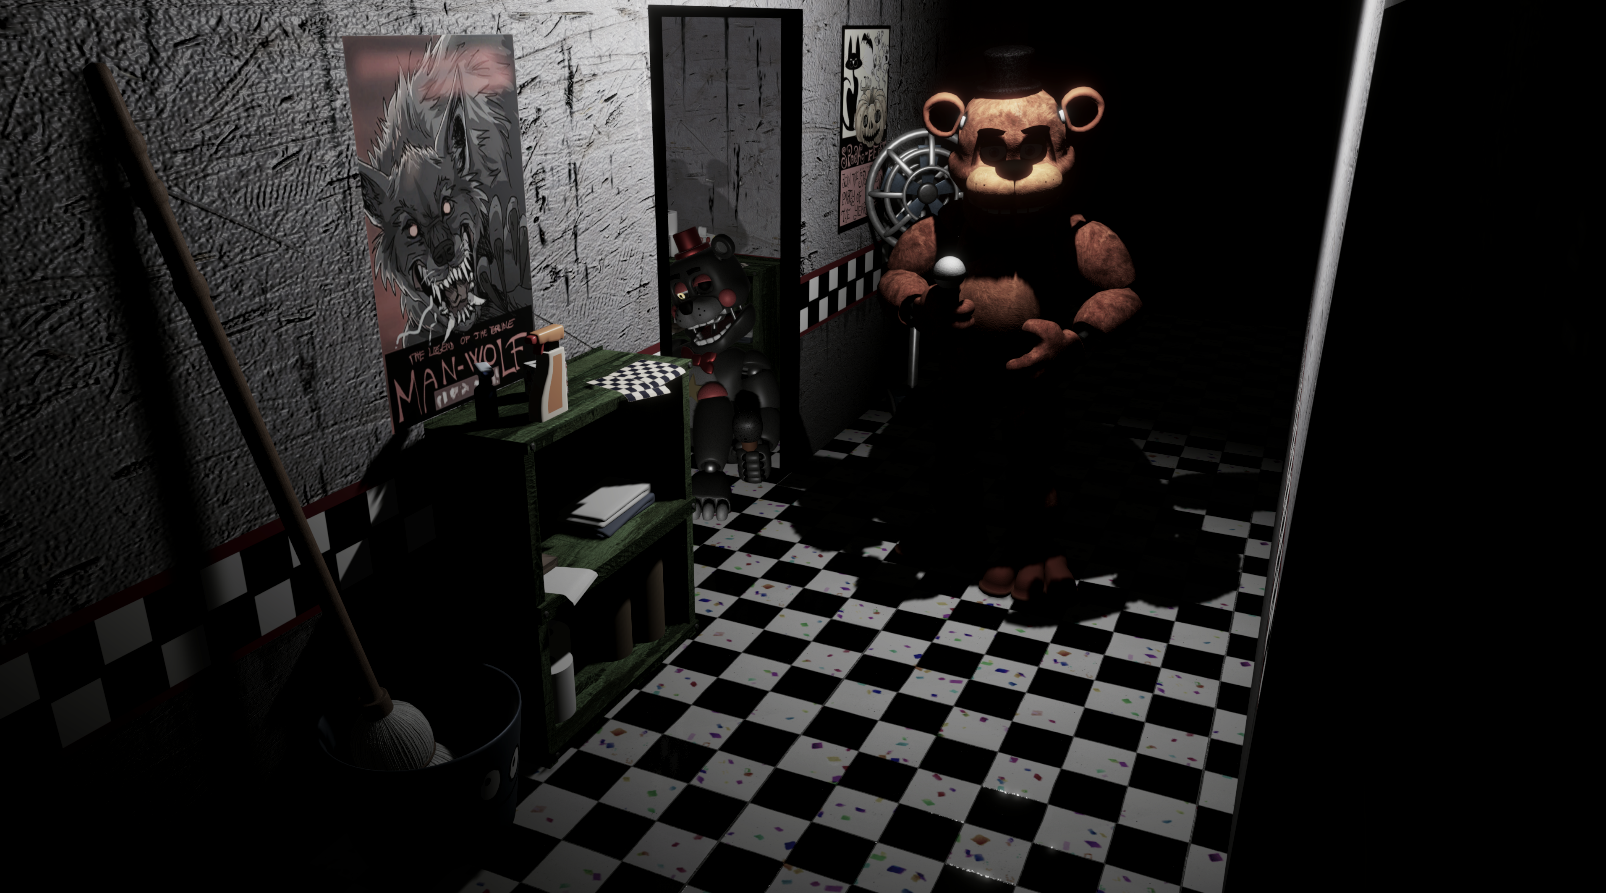 Five Nights at Freddy's Ultimate Custom Night VR